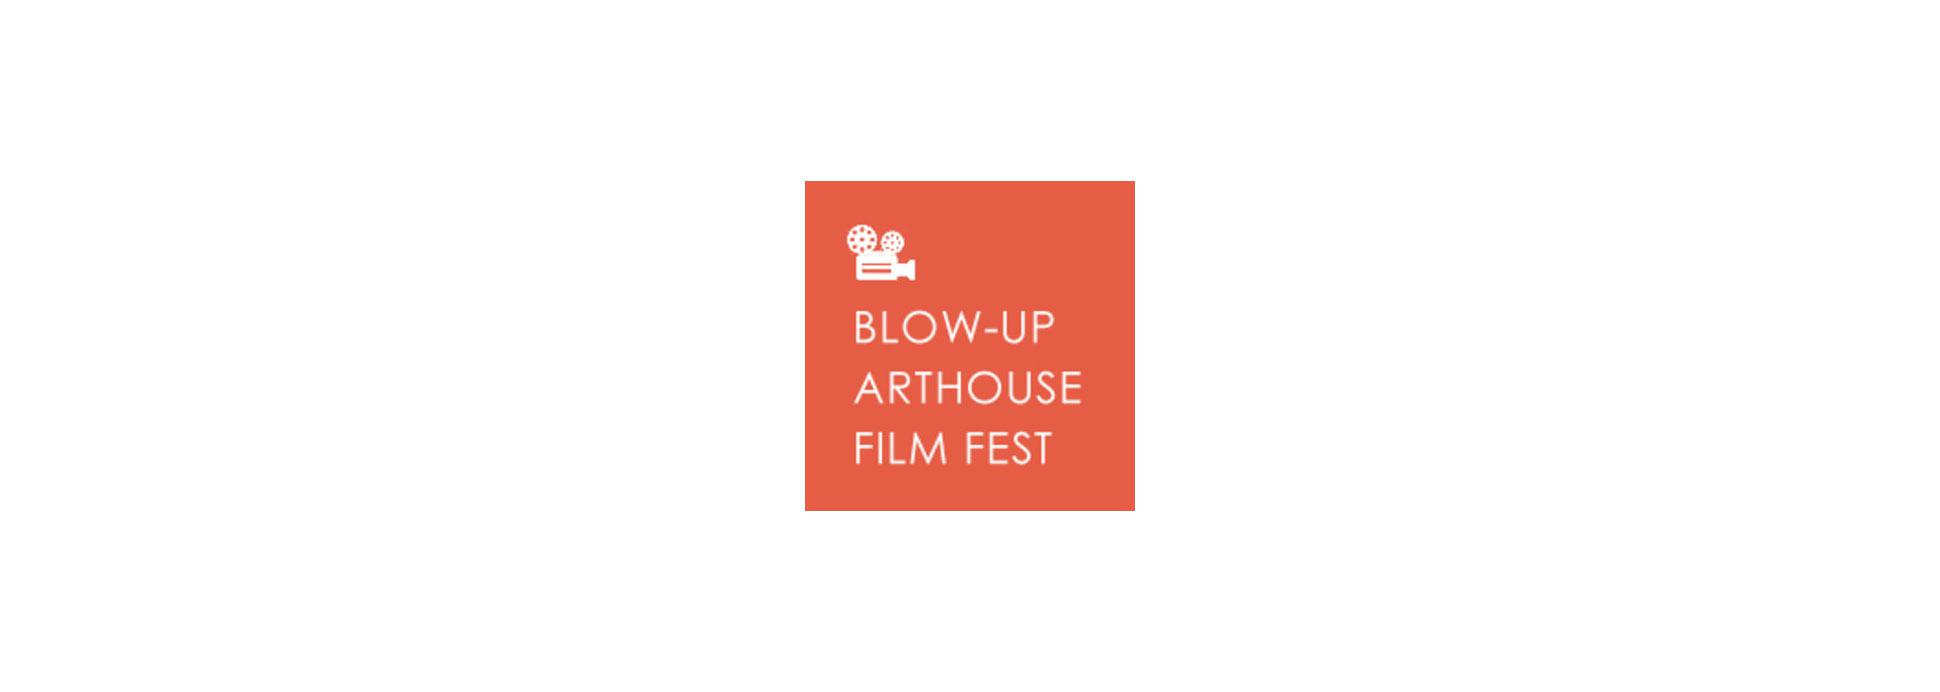 Blowup Film Fest